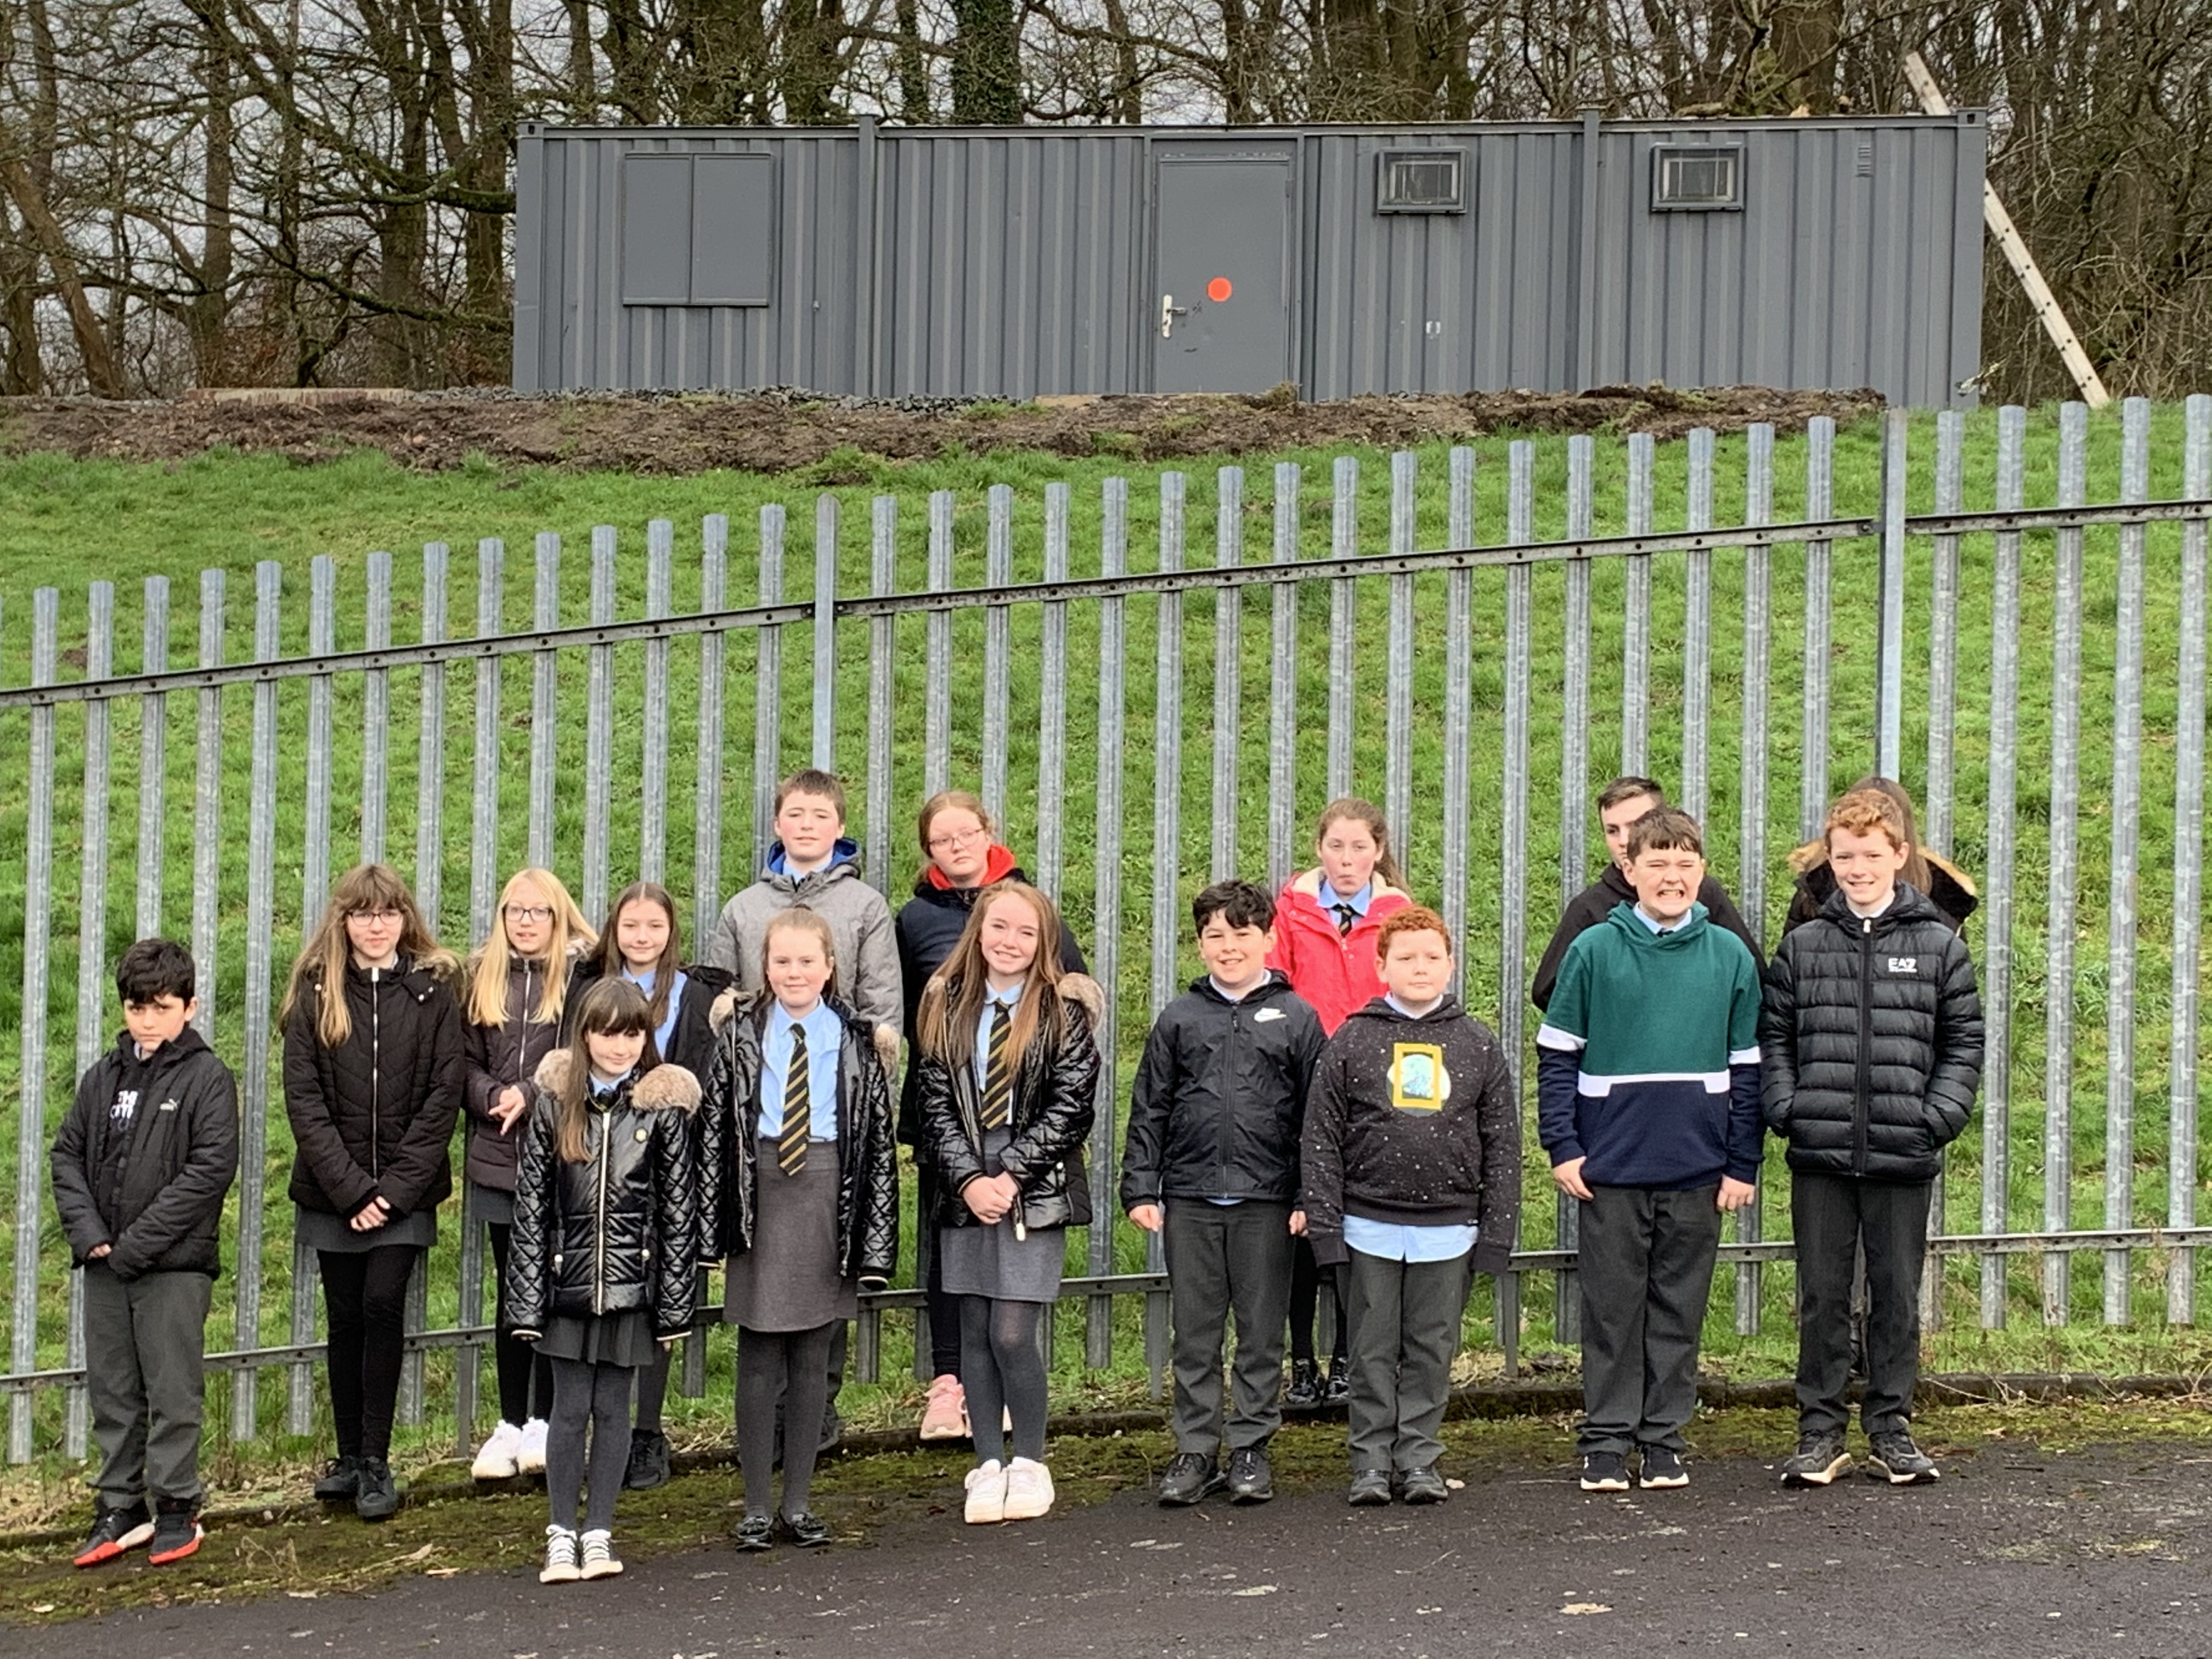 Sanctuary Scotland delivers outdoor classrooms for Cumbernauld pupils